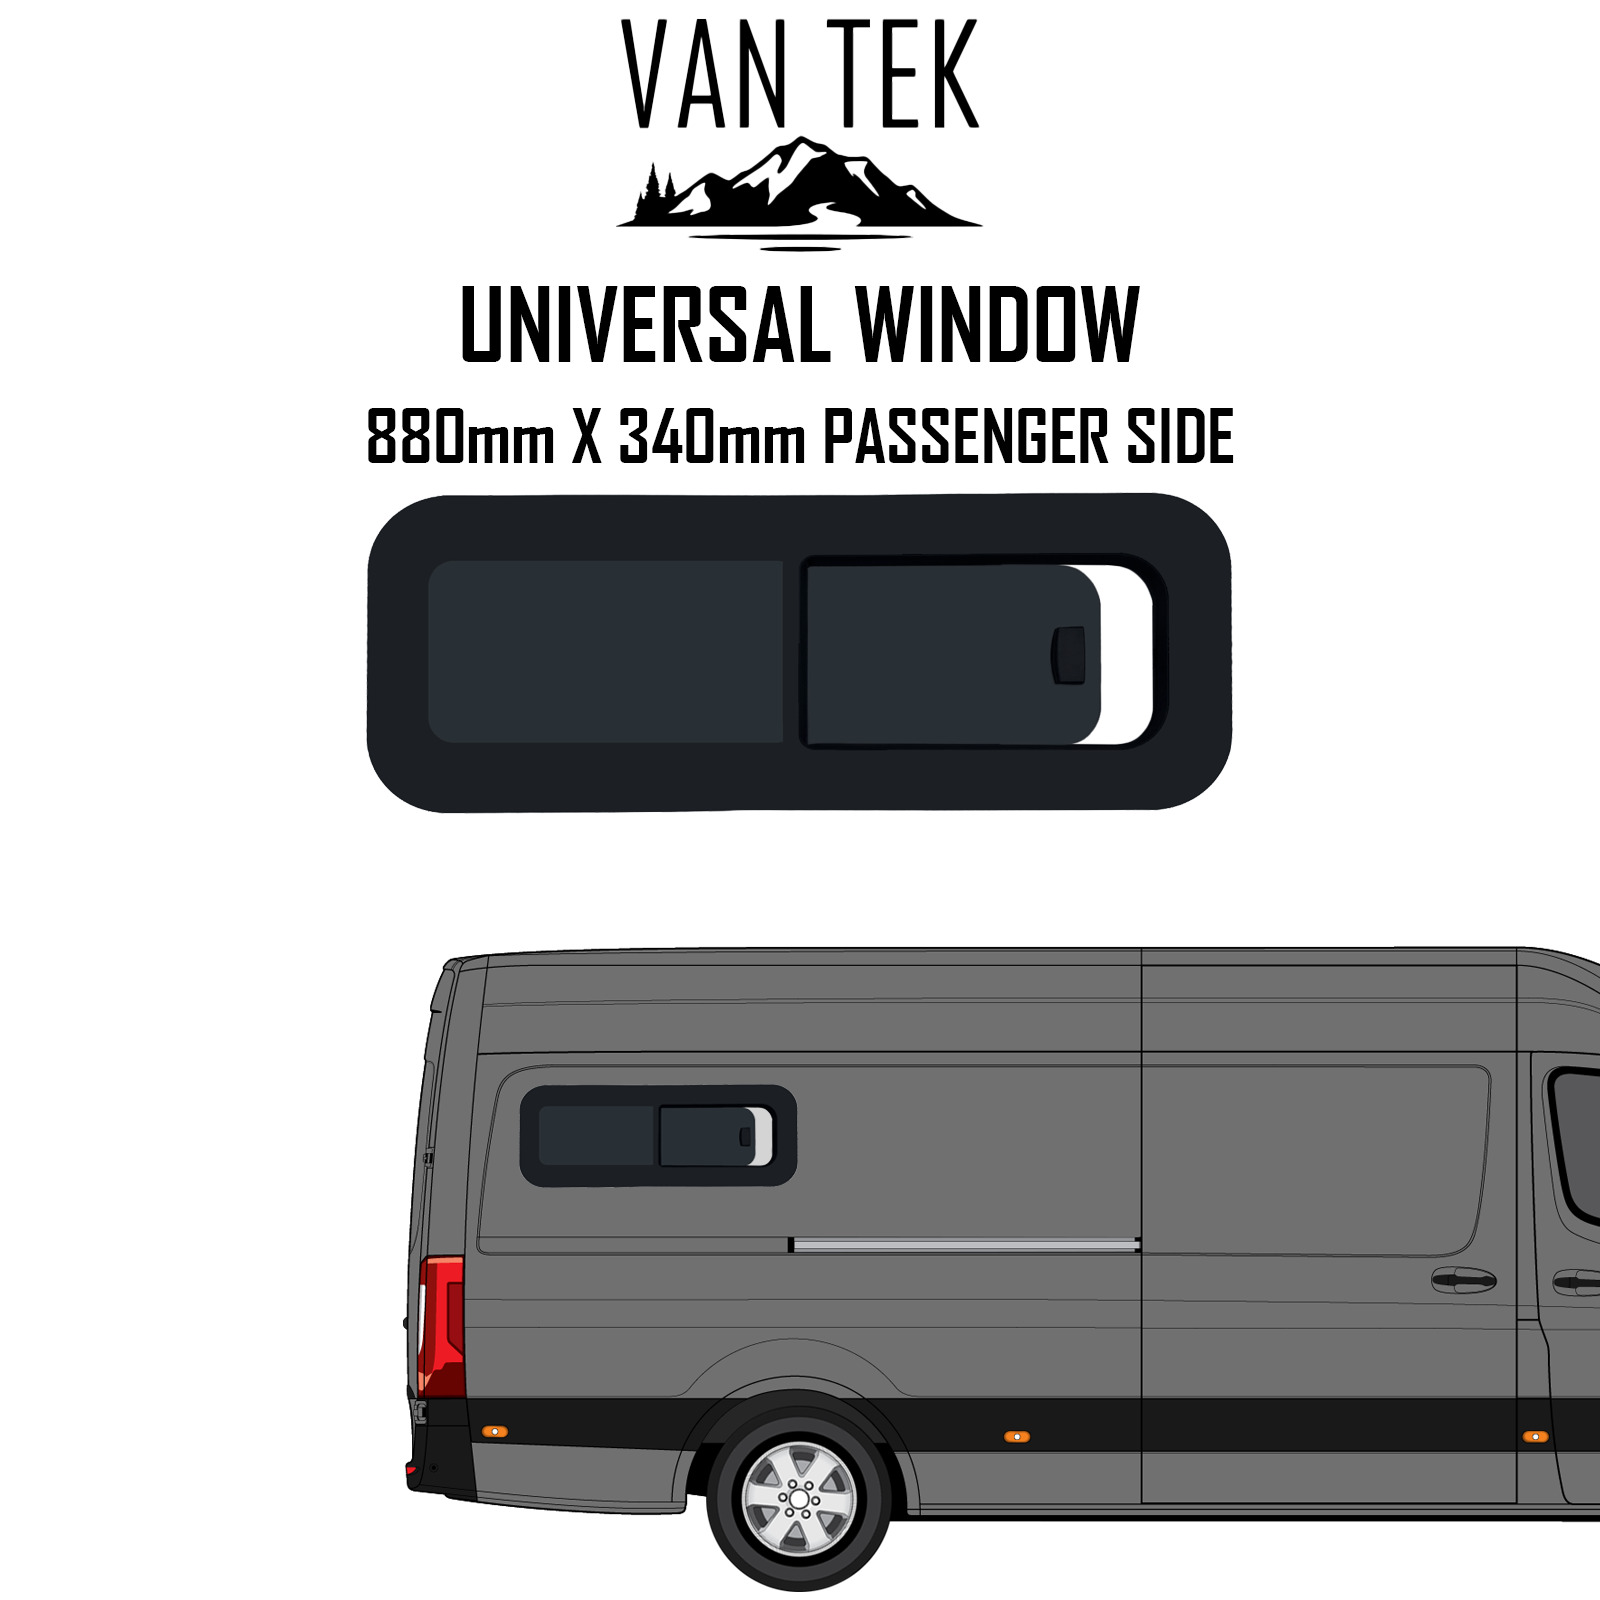 Universal Passenger Side Sliding BUNK window 880mm x 340mm  Van Tek Glass